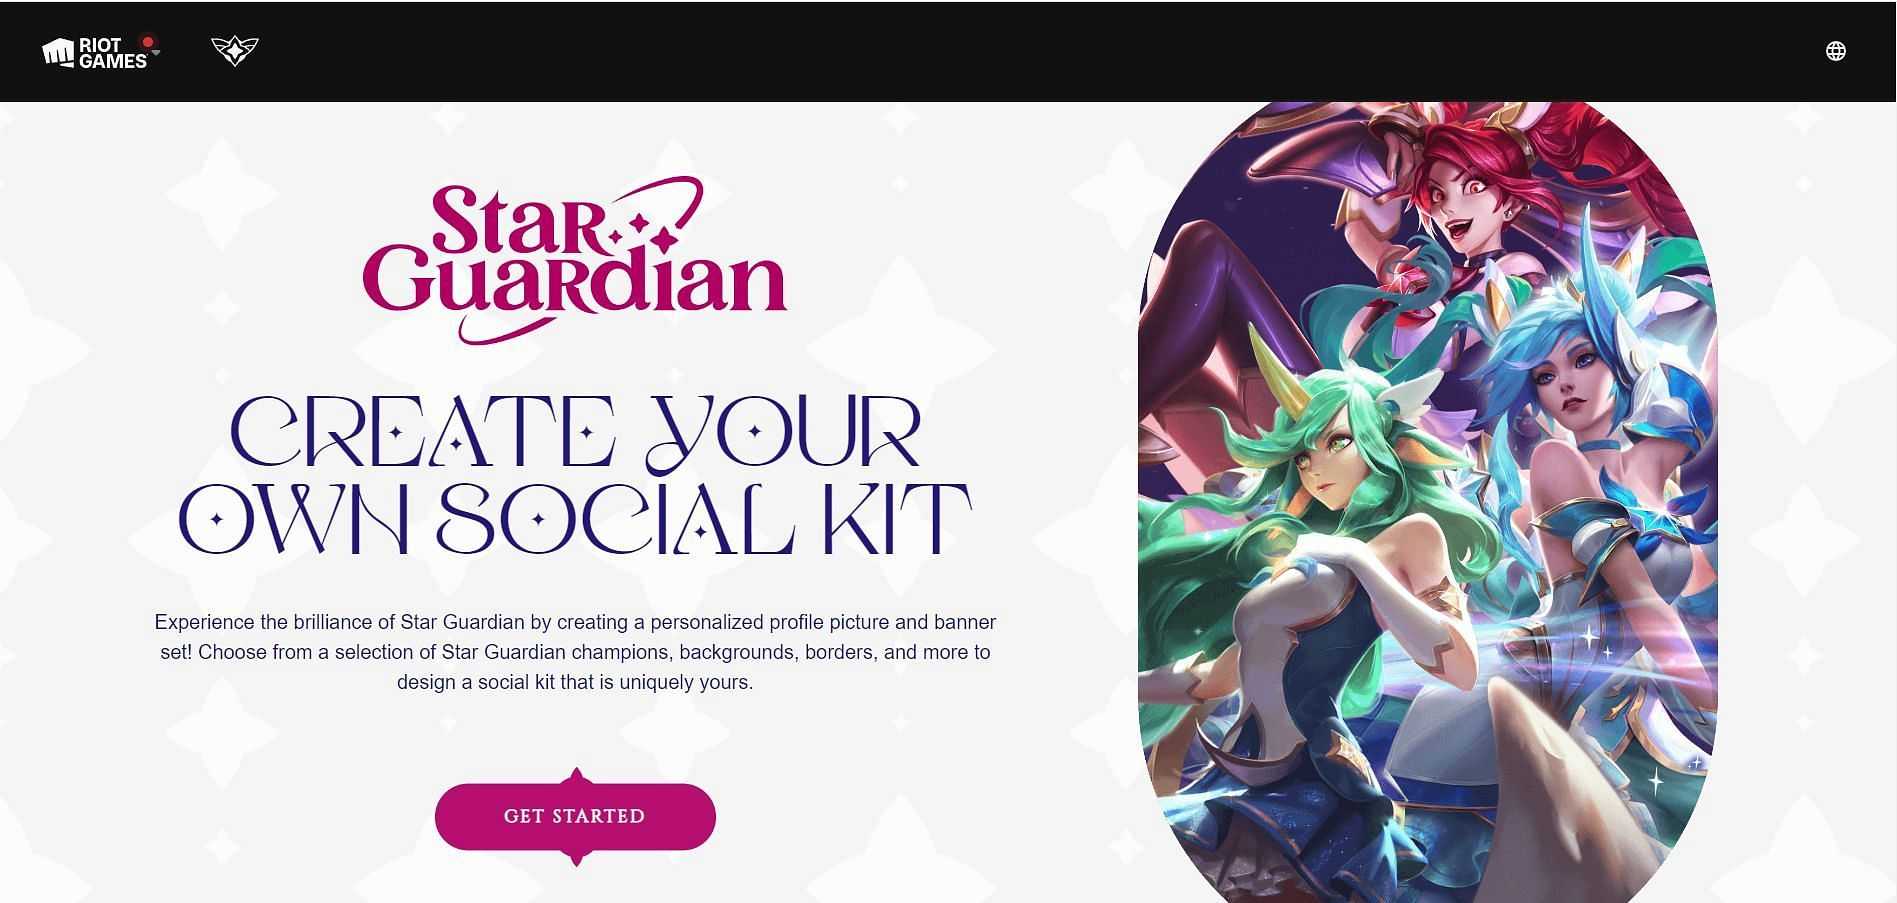 Star Guardian banner creation website (Image via Riot Games)